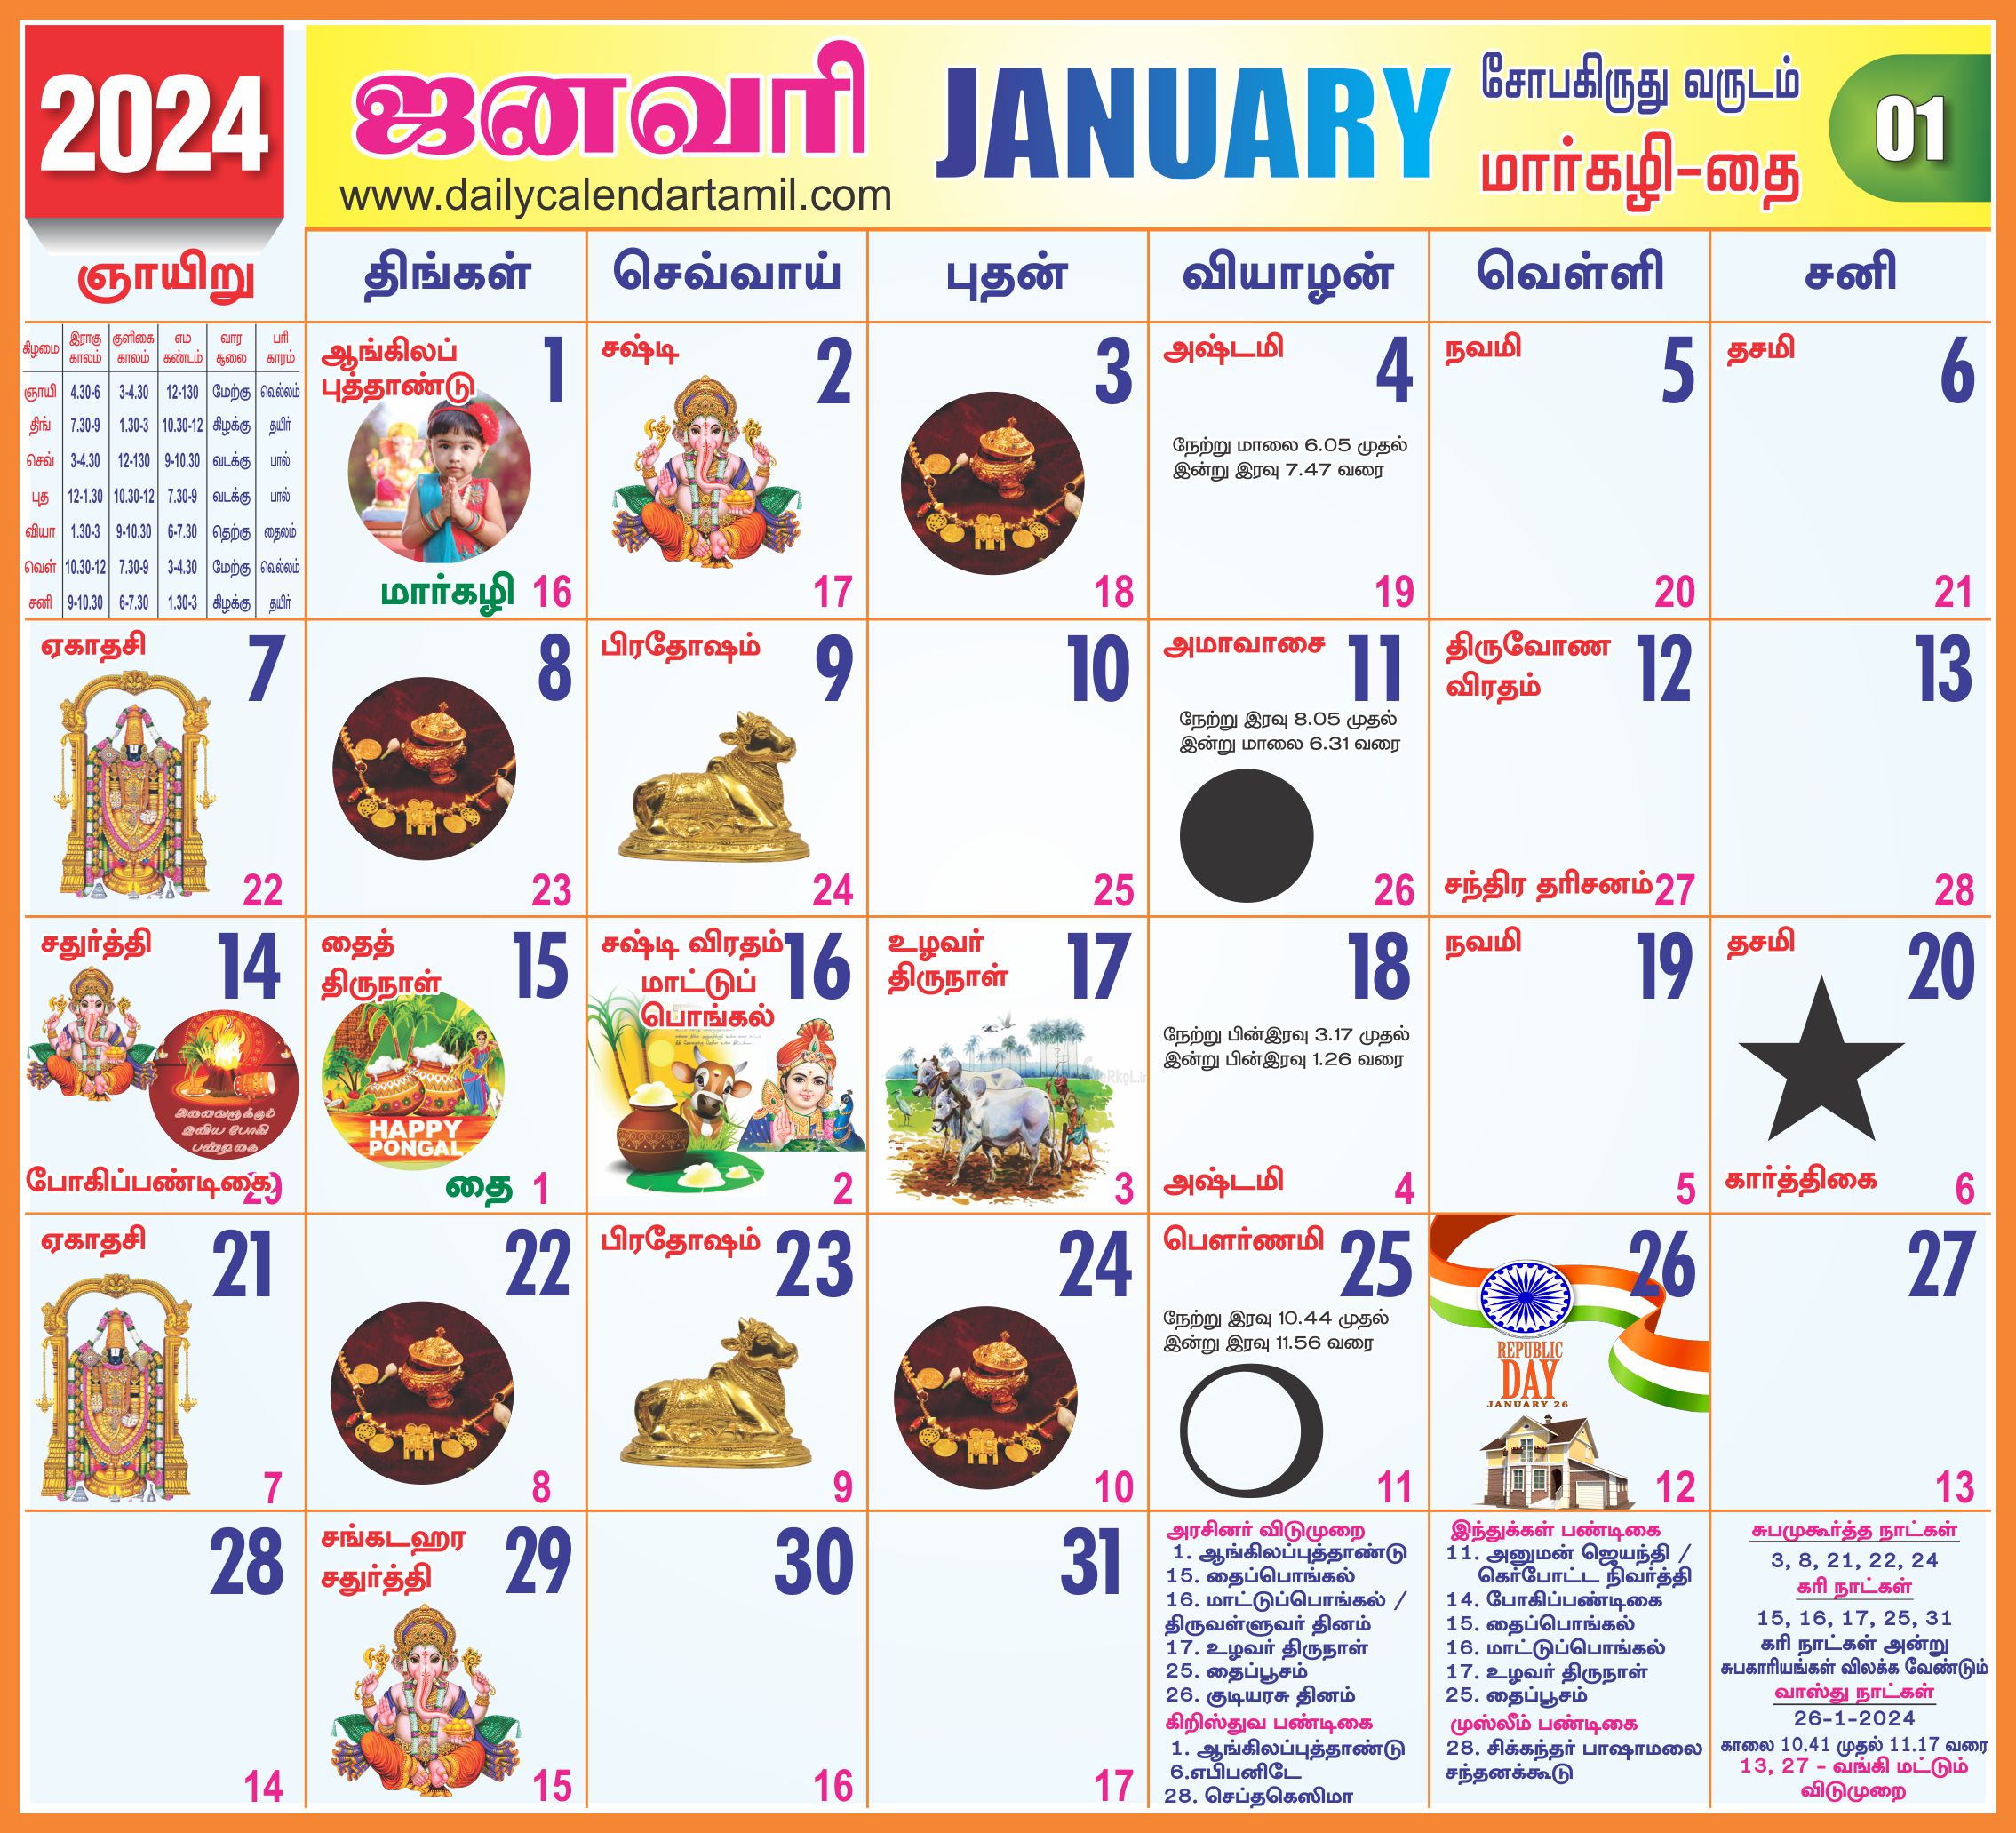 Tamil Monthly Calendar 2022 Tamil Calendar January 2022 | தமிழ் காலண்டர் 2022